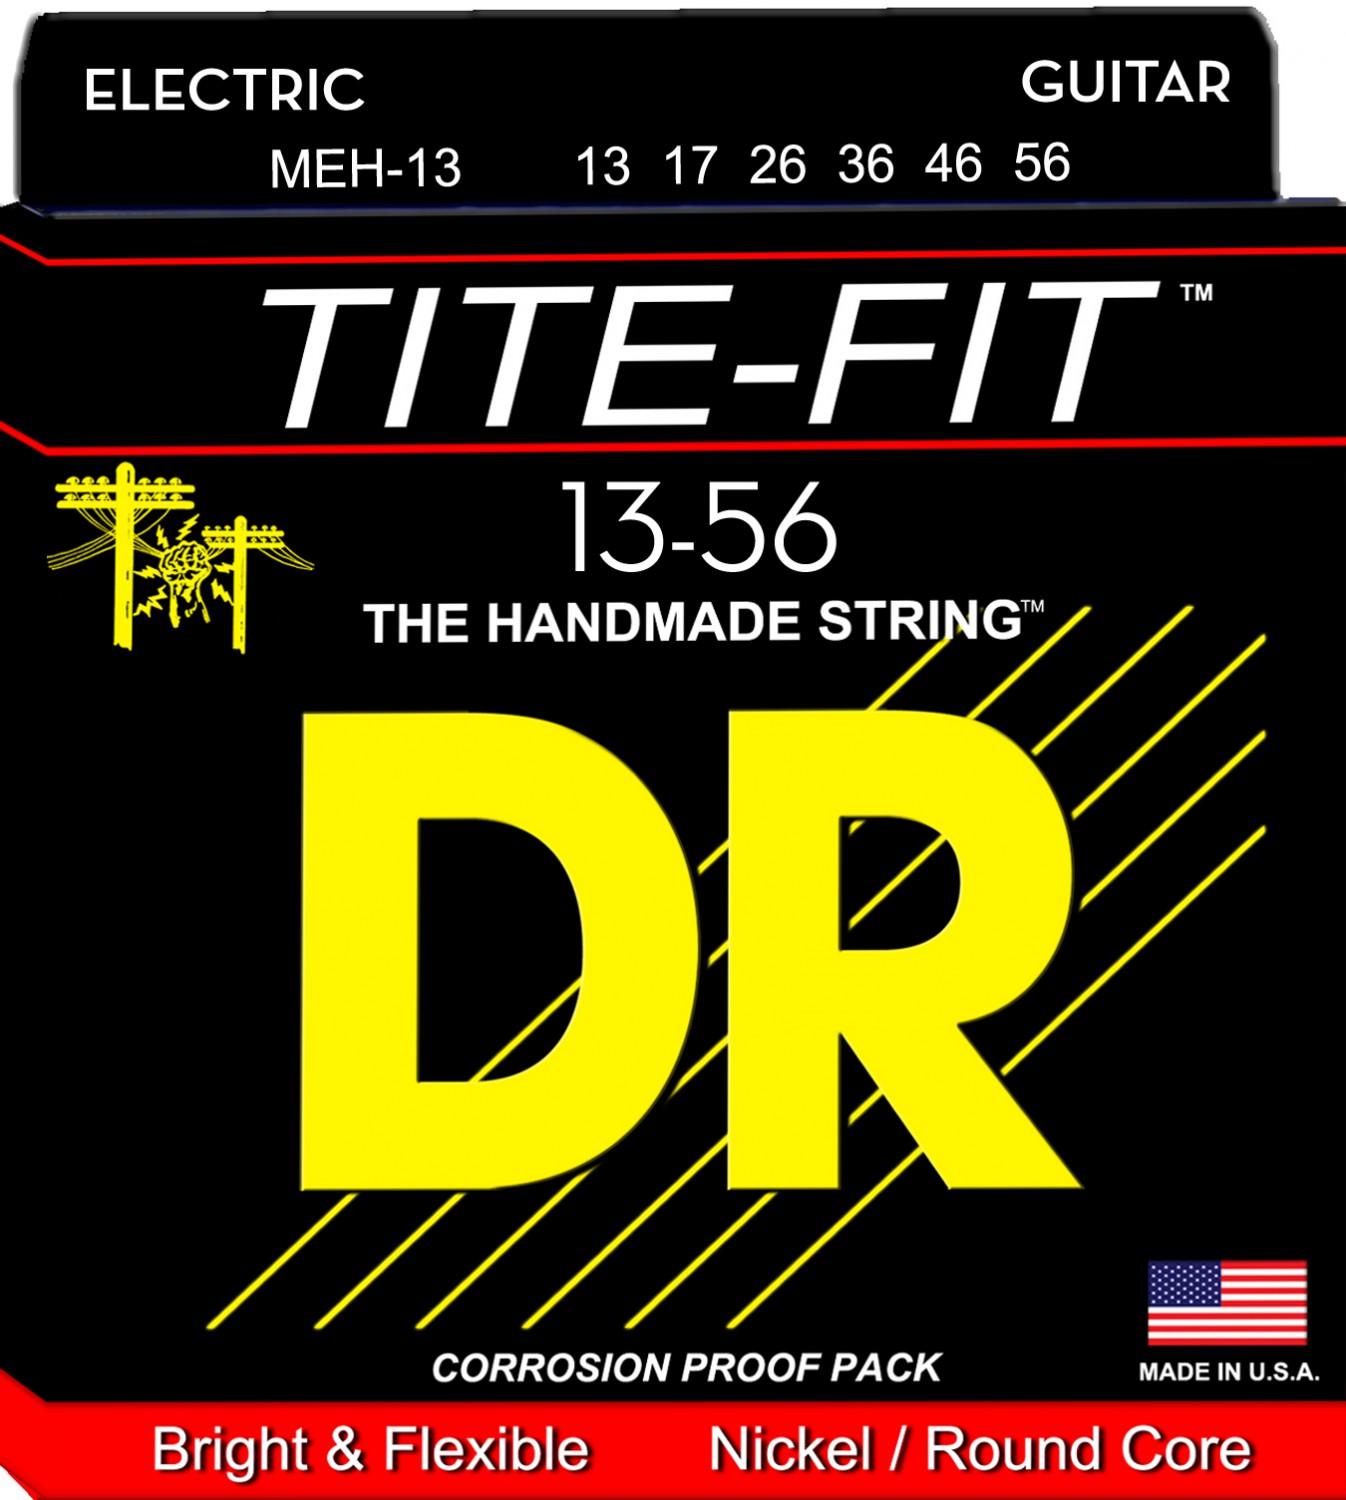 DR TITE-FIT - MEH-13 - struny do gitary elektrycznej Set, Mega Heavy, .013-.056